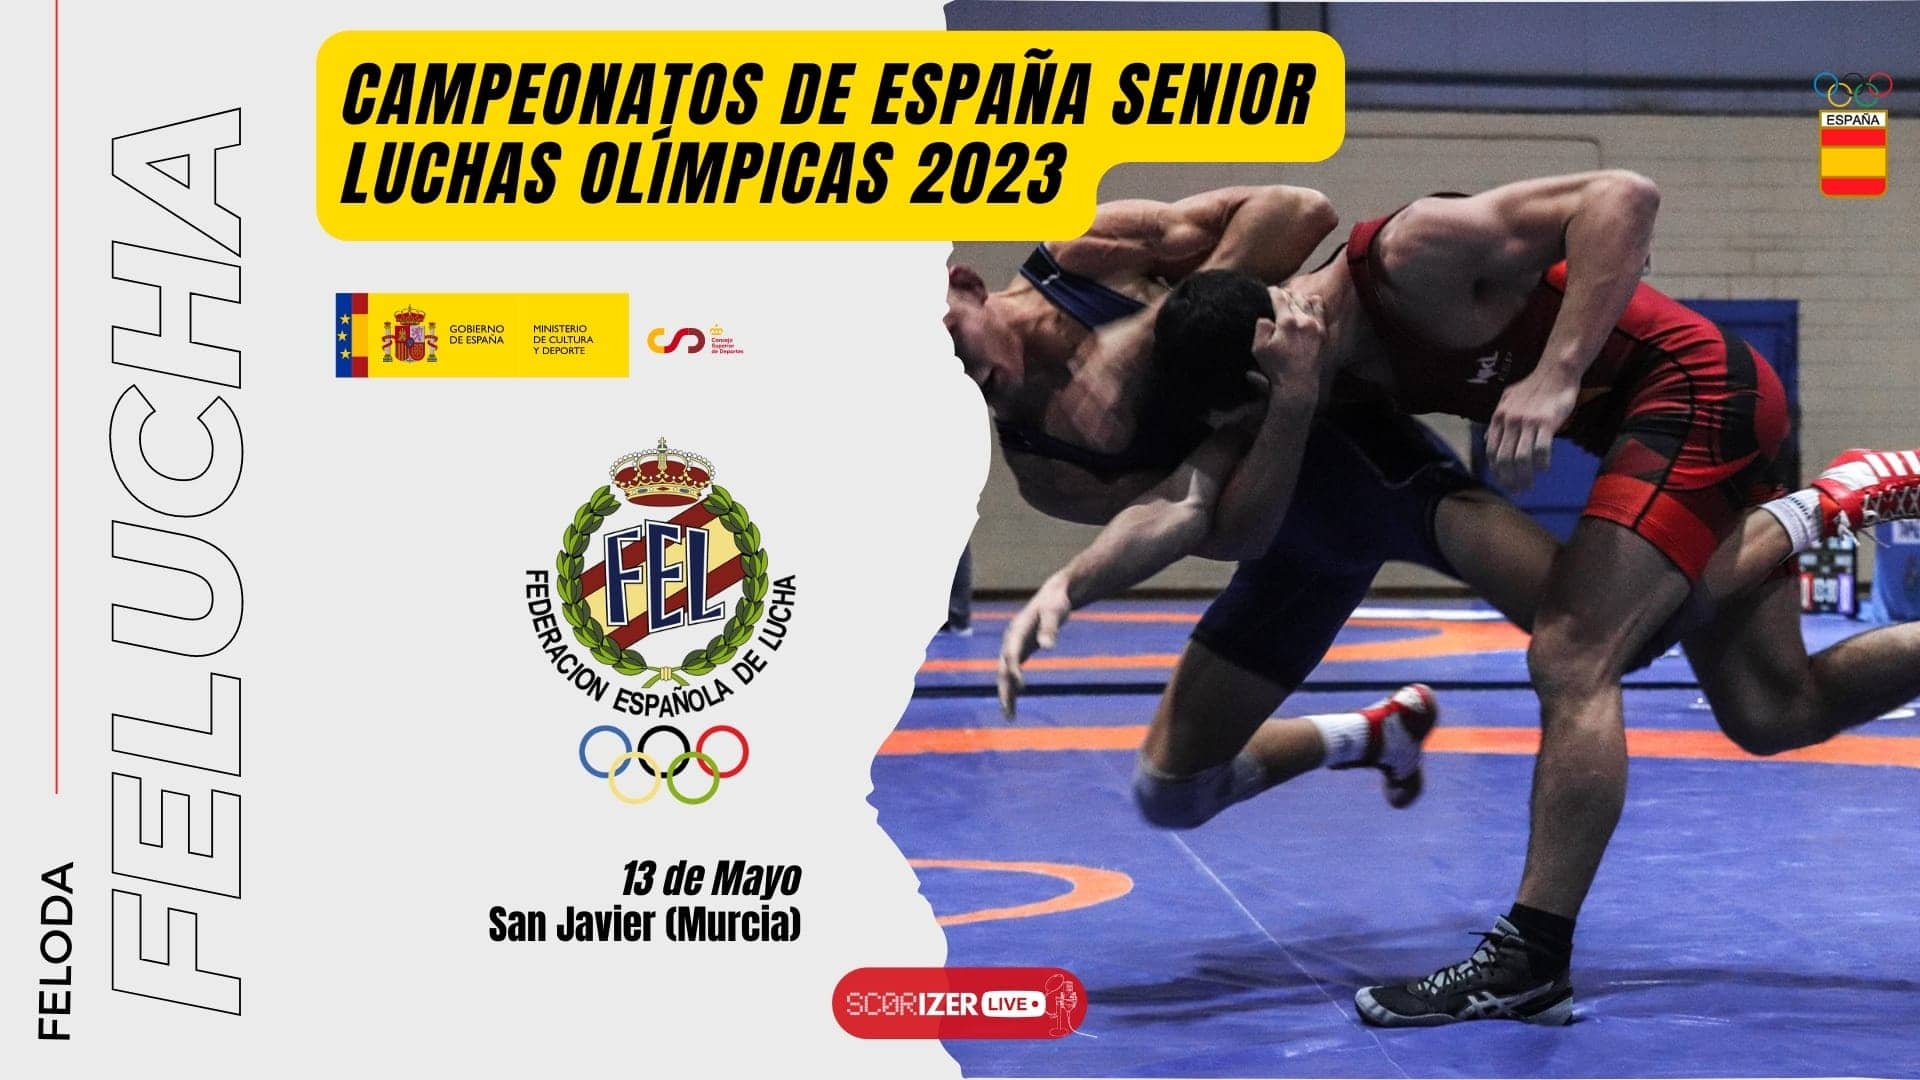 Campeonato de España Senior de Luchas Olimpicas 2023